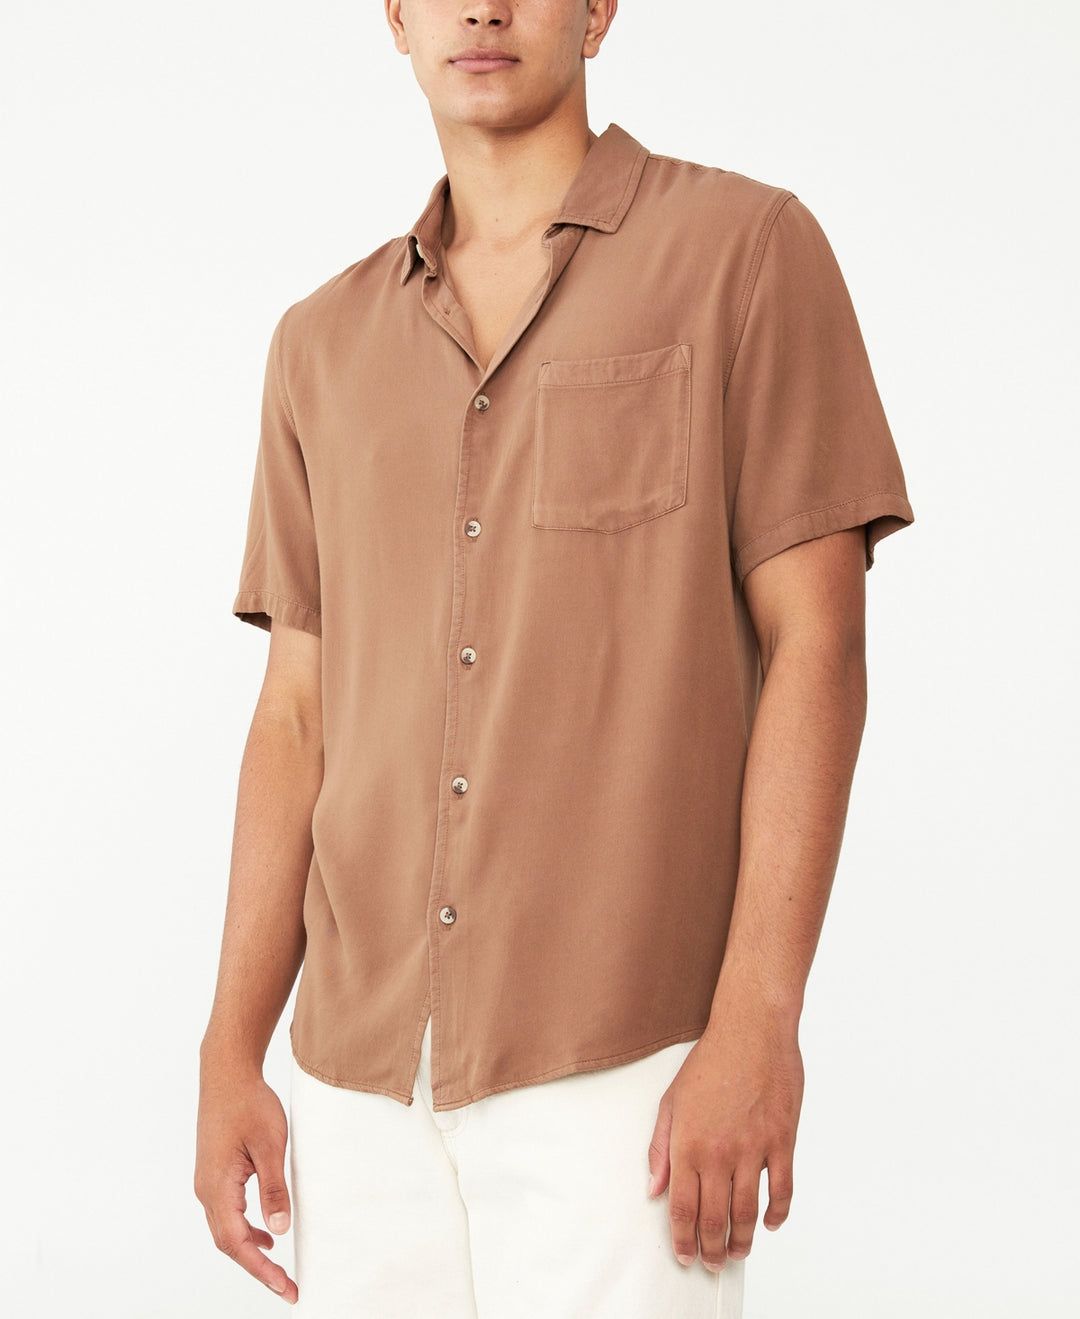 COTTON ON Men's Cuban Short Sleeves Shirt Brown Size Large